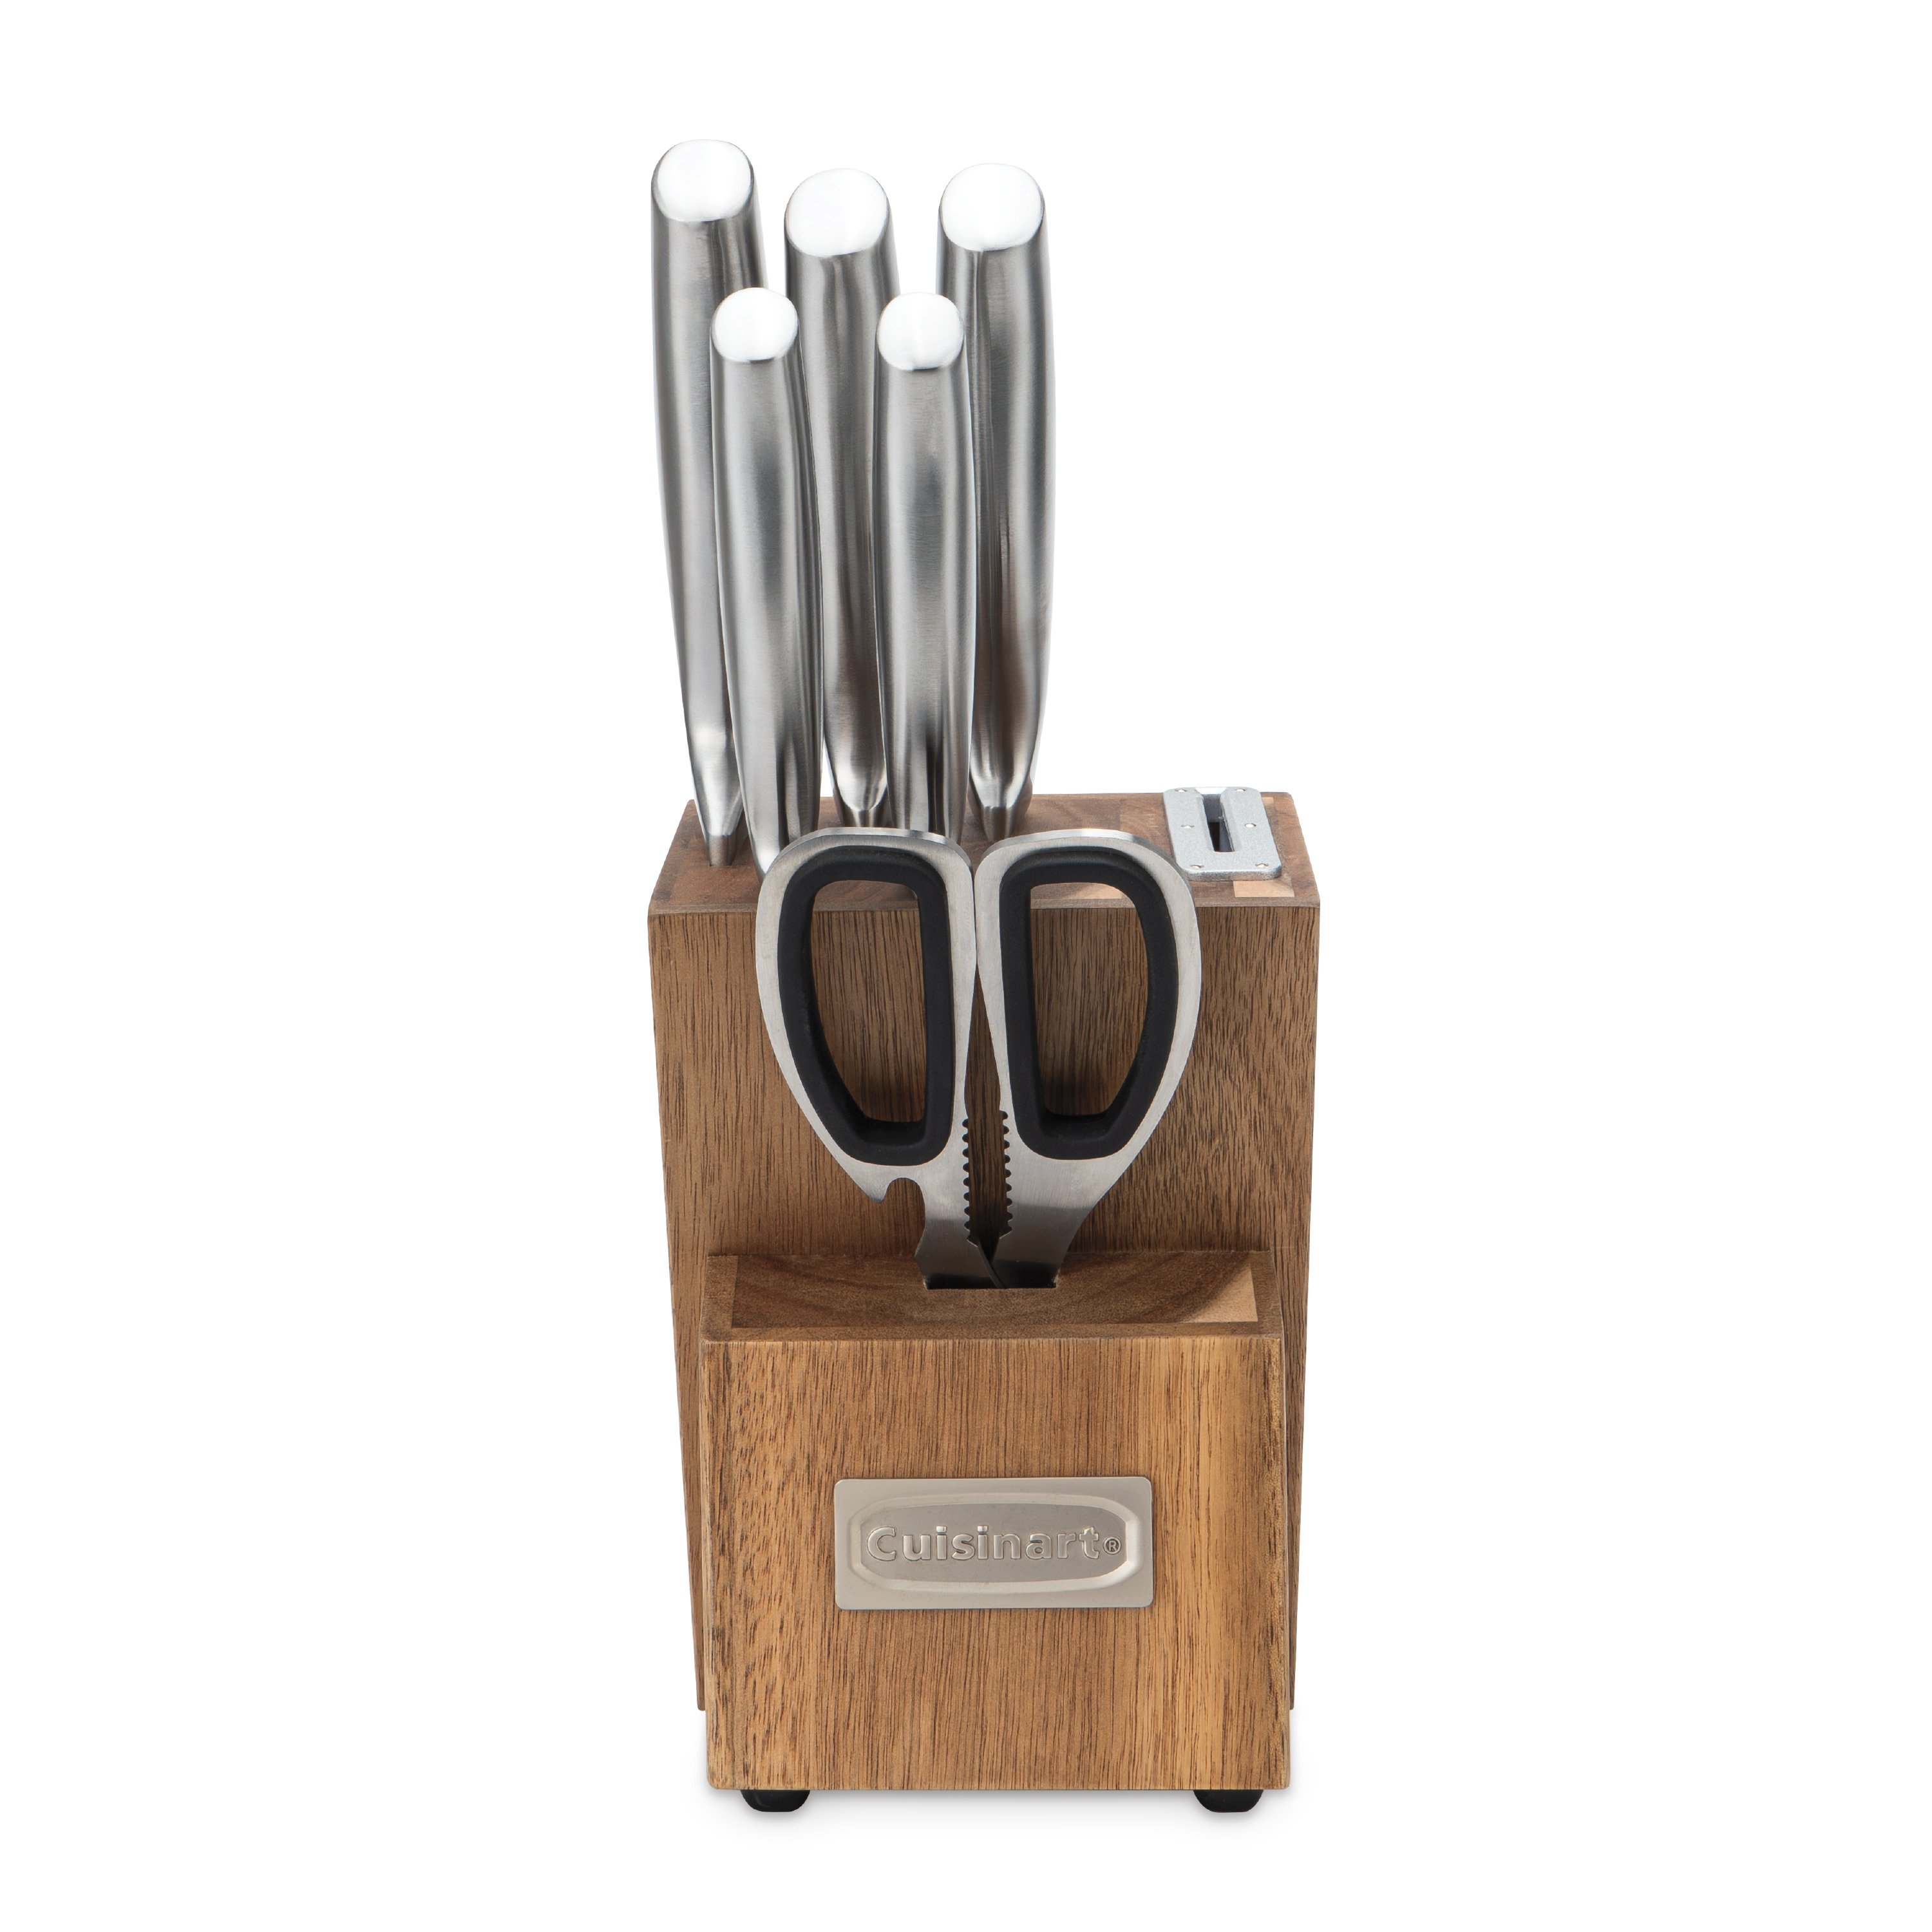 Cuisinart 7-piece Acacia Knife Block Set Built-In Sharpener Ergonomic Handle